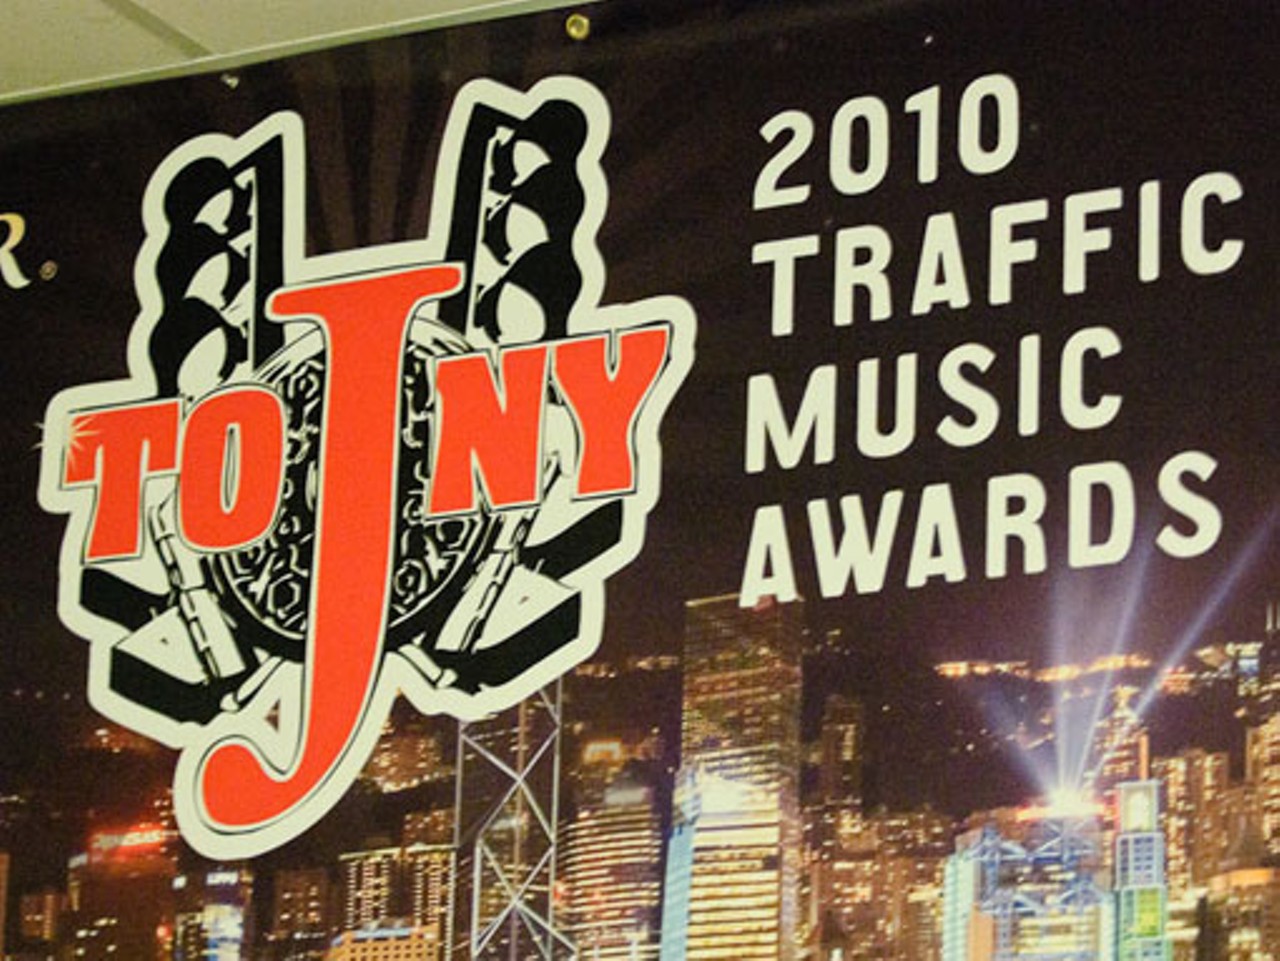 The 2010 Traffic Music Awards.